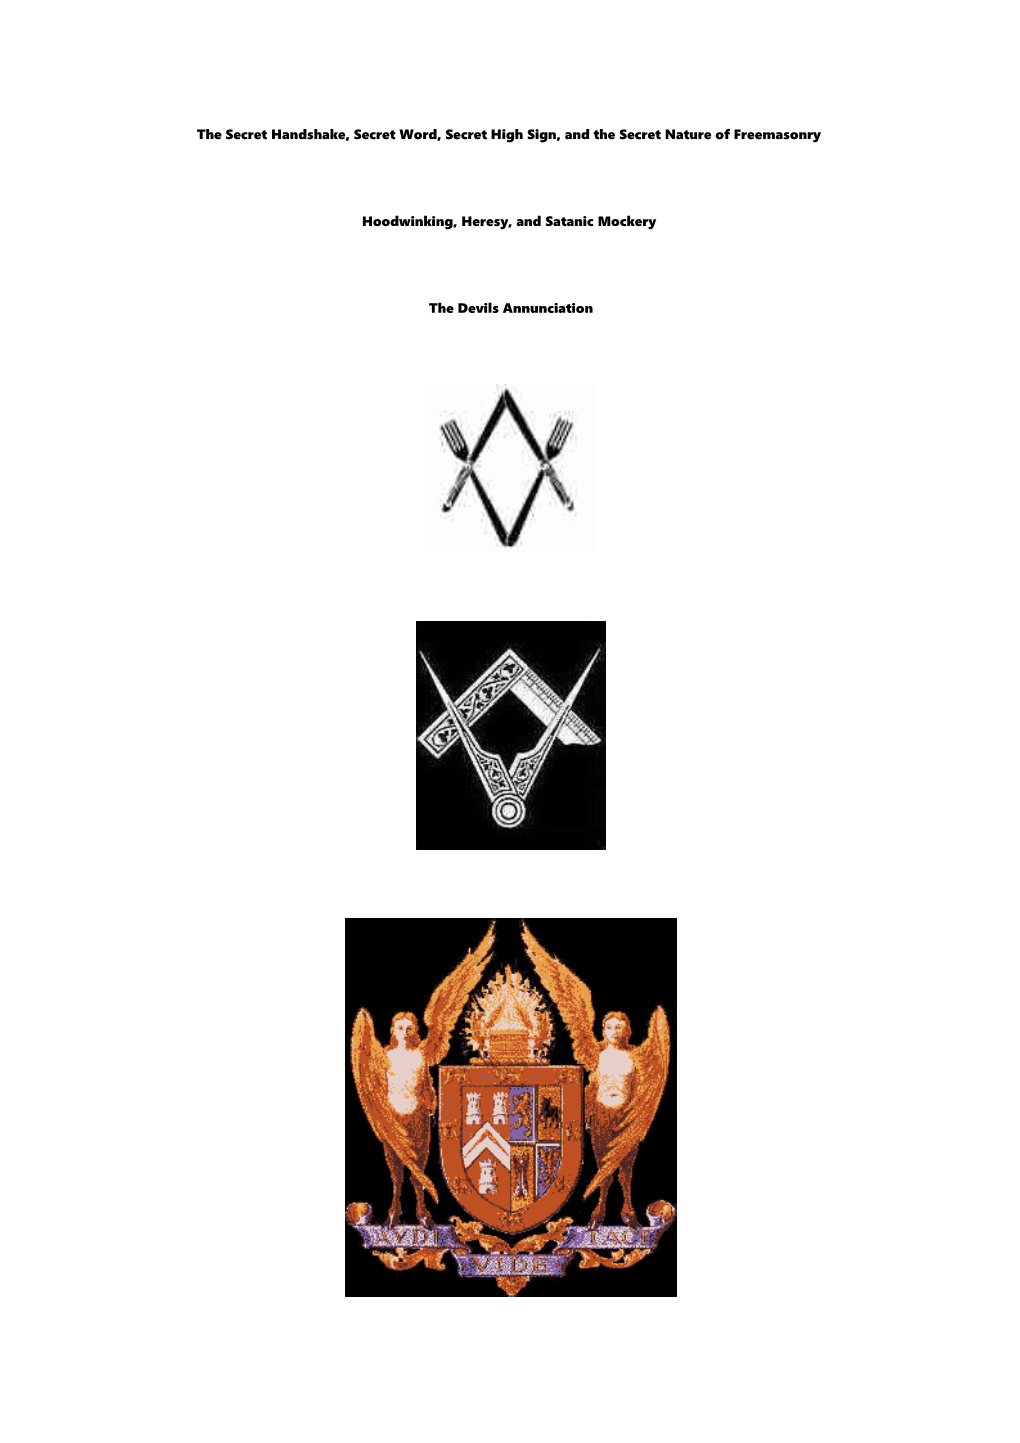 The Secret Handshake, Secret Word, Secret High Sign, and the Secret Nature of Freemasonry